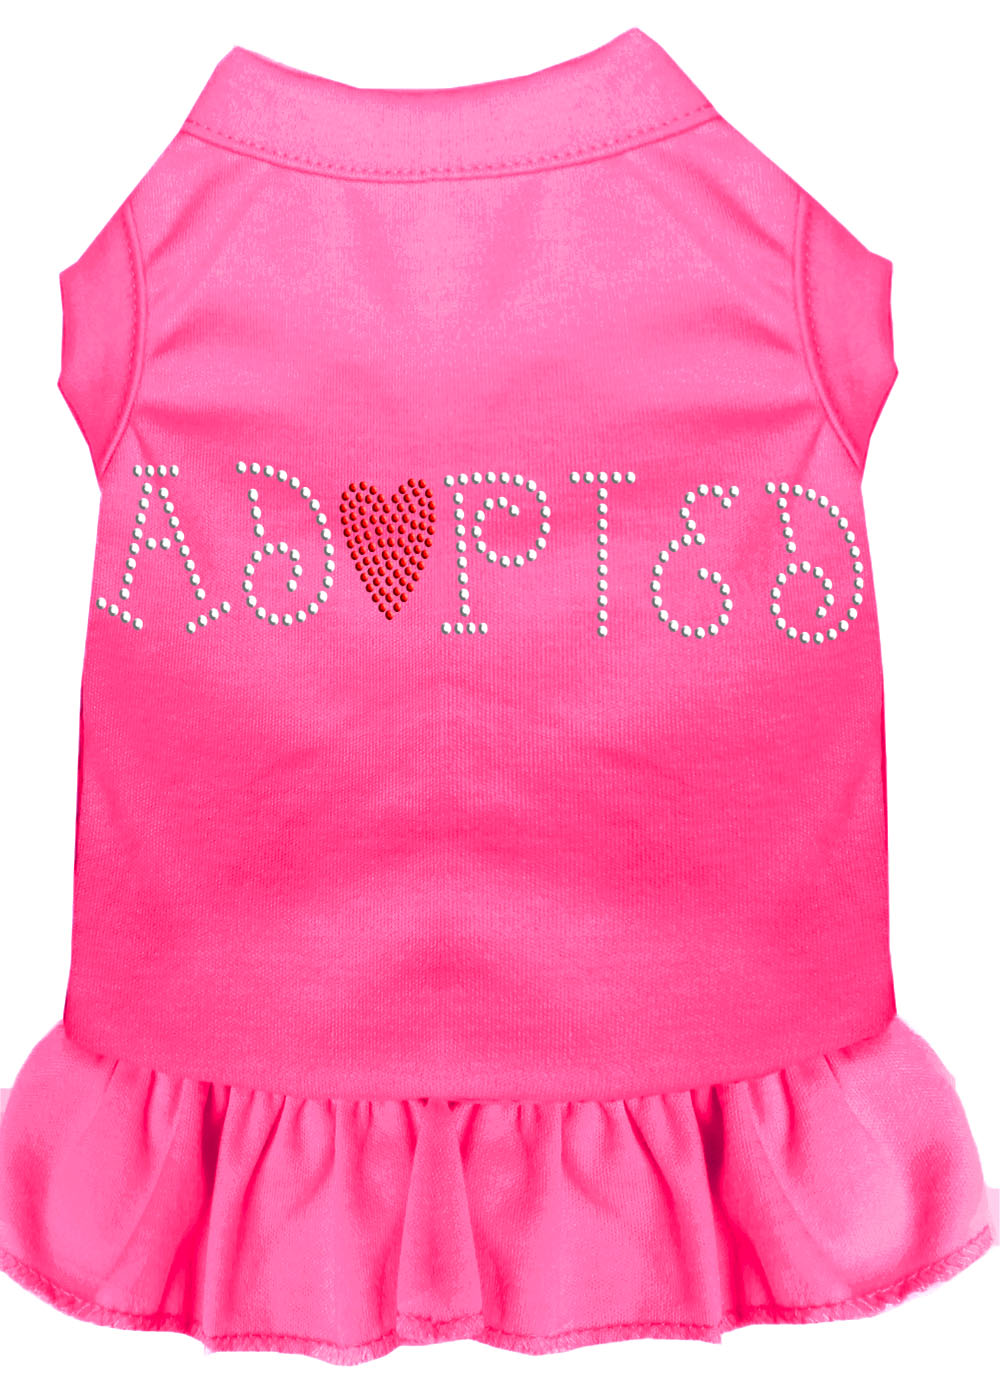 Adopted Rhinestone Dress Bright Pink XXXL